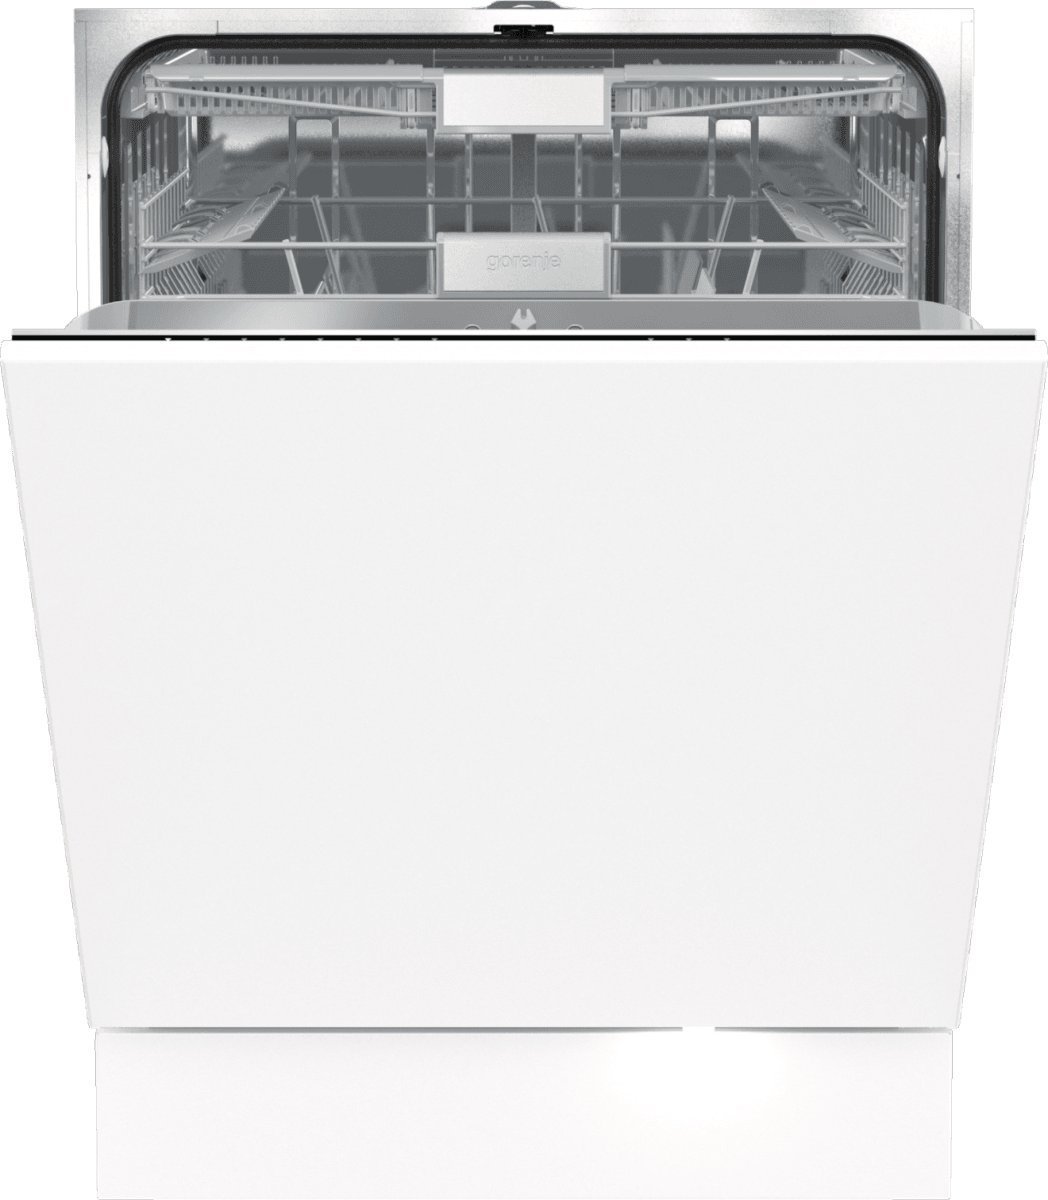 Masini de spalat vase incorporabile - Mașină de spălat vase incorporabila Gorenje GV673C62,16 seturi,39 dB,59,8 cm